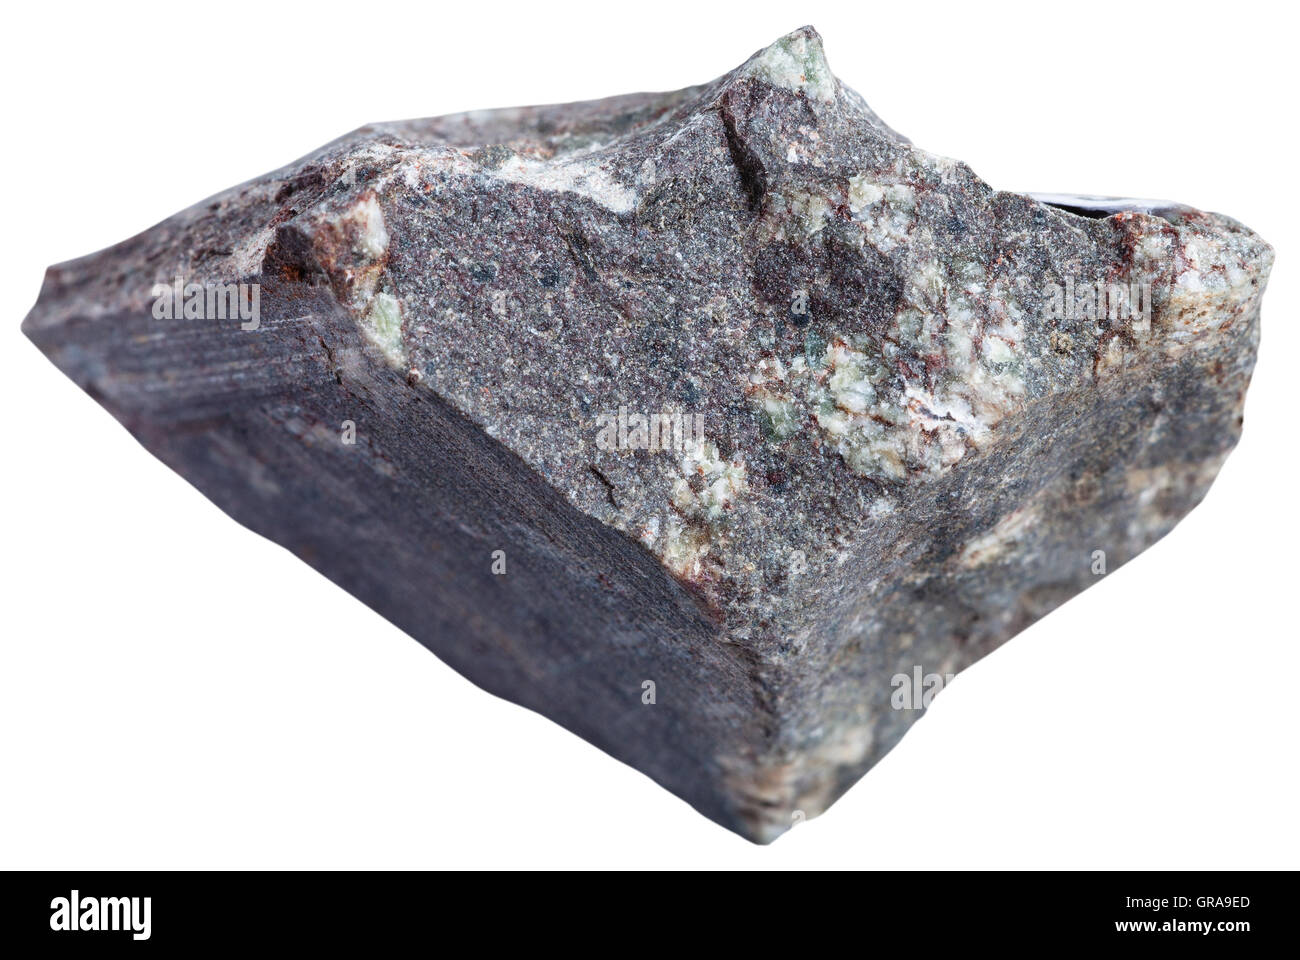 macro shooting of Igneous rock specimens - porphyry Basalt (basalt porphyrite) stone isolated on white background Stock Photo